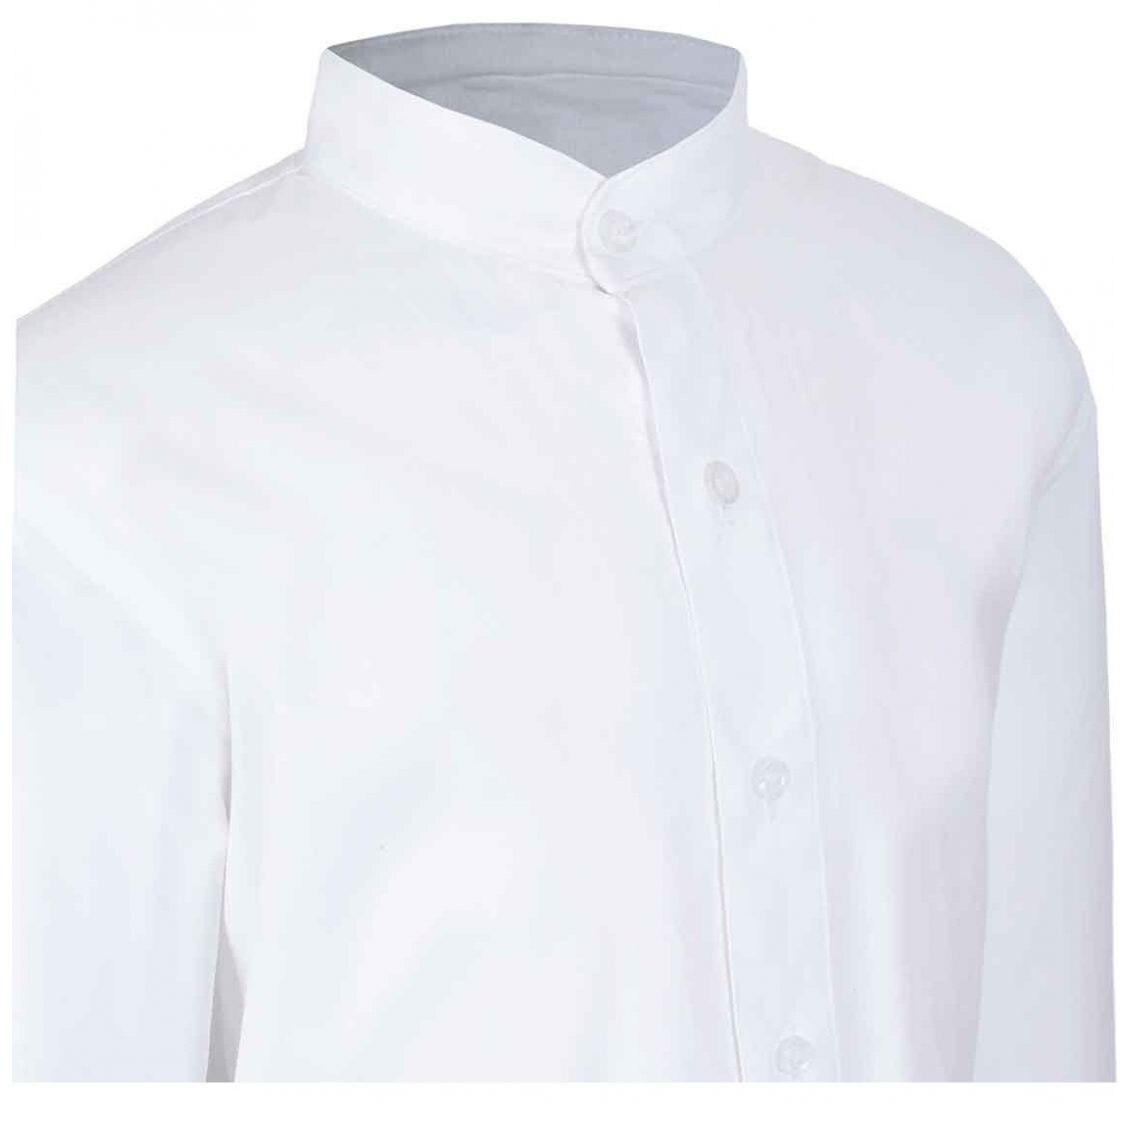 Camisa manga larga cuello mao regular oscar collection para niño  - Sears